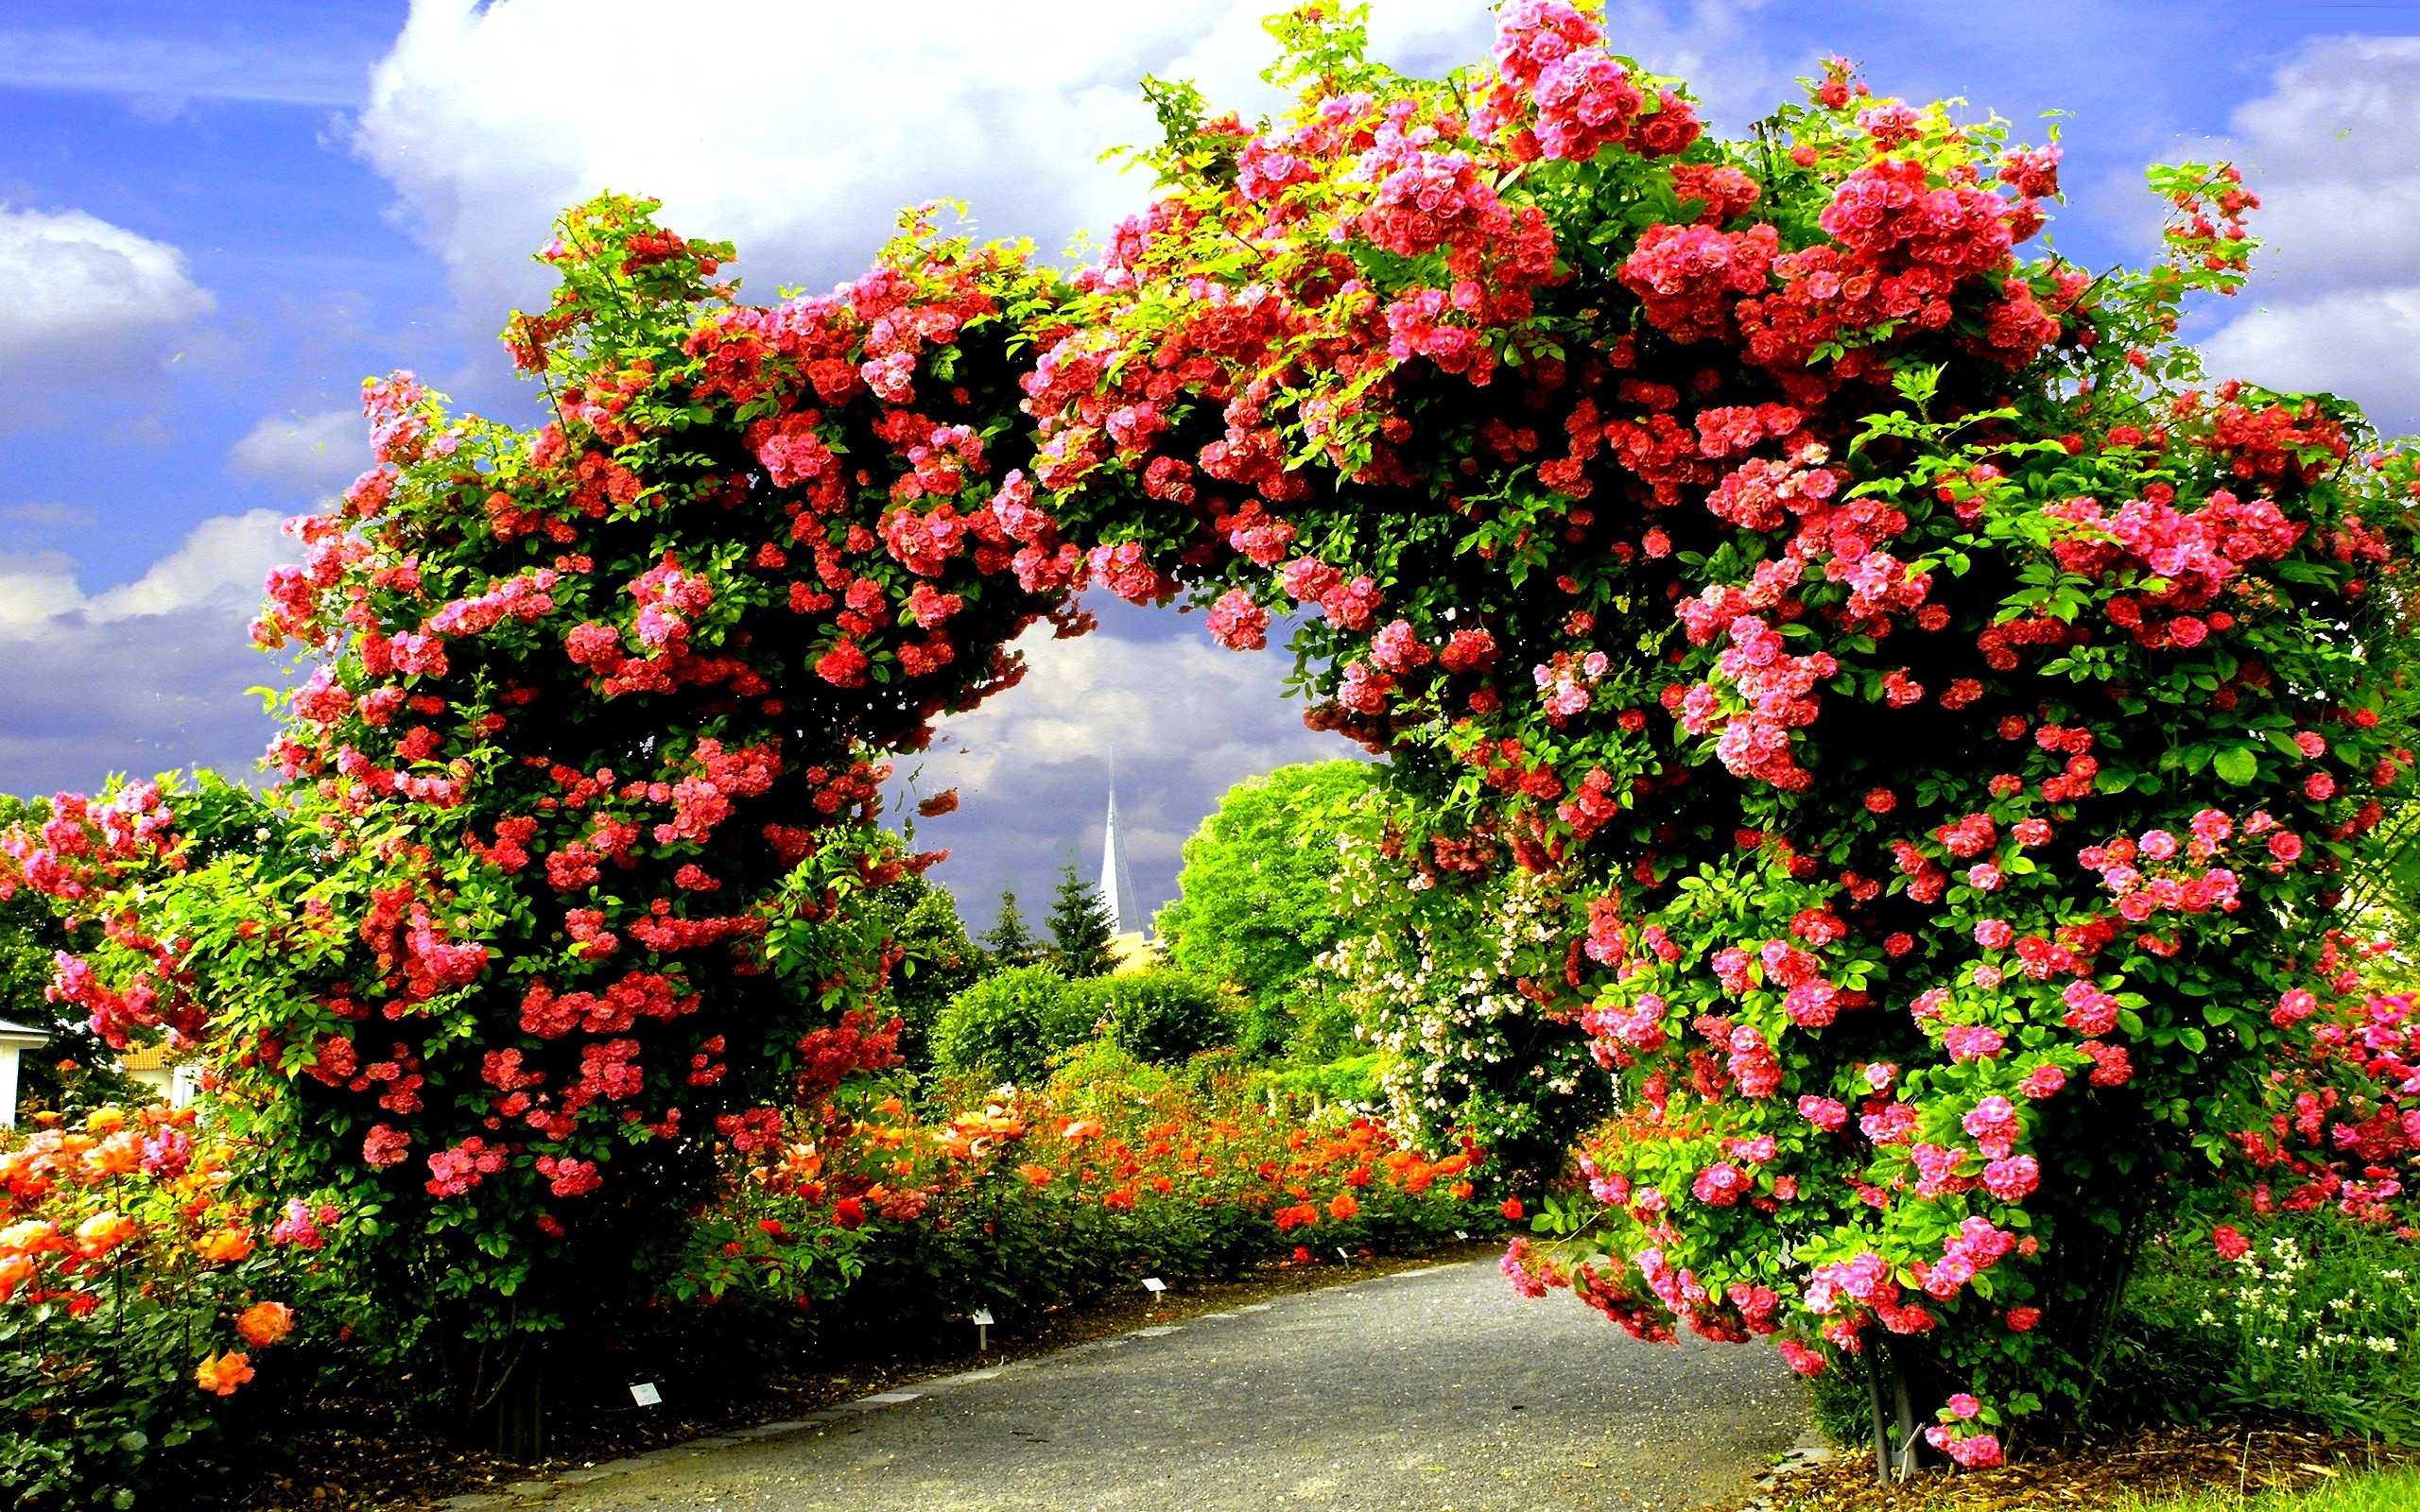 Rose Garden Background Images Hd - carrotapp